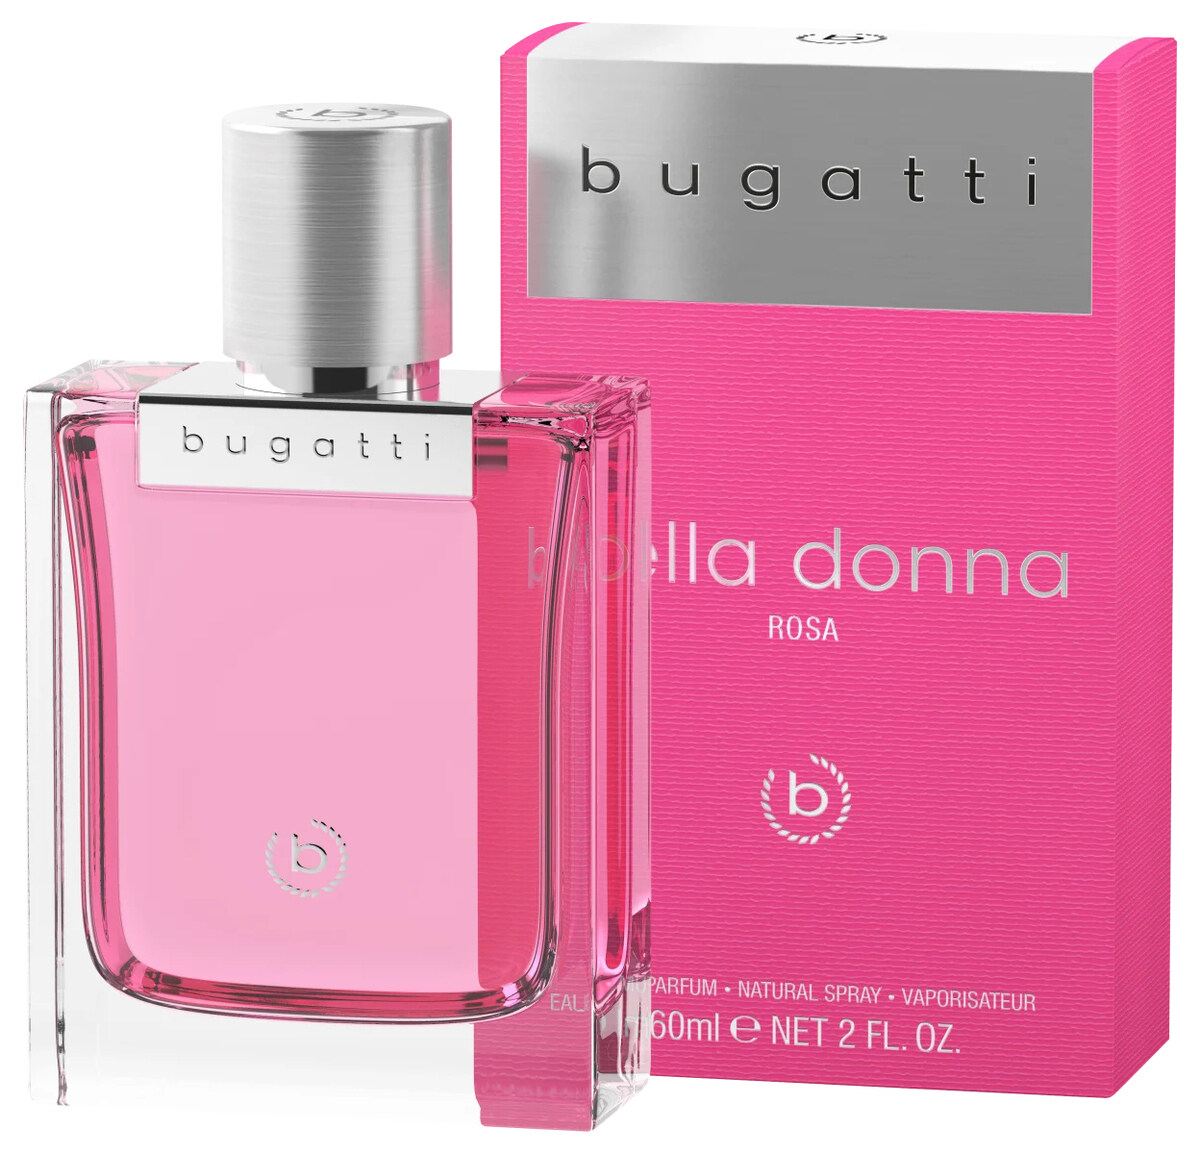 Bella Donna Rosa by & » Fashion Facts bugatti Reviews Perfume